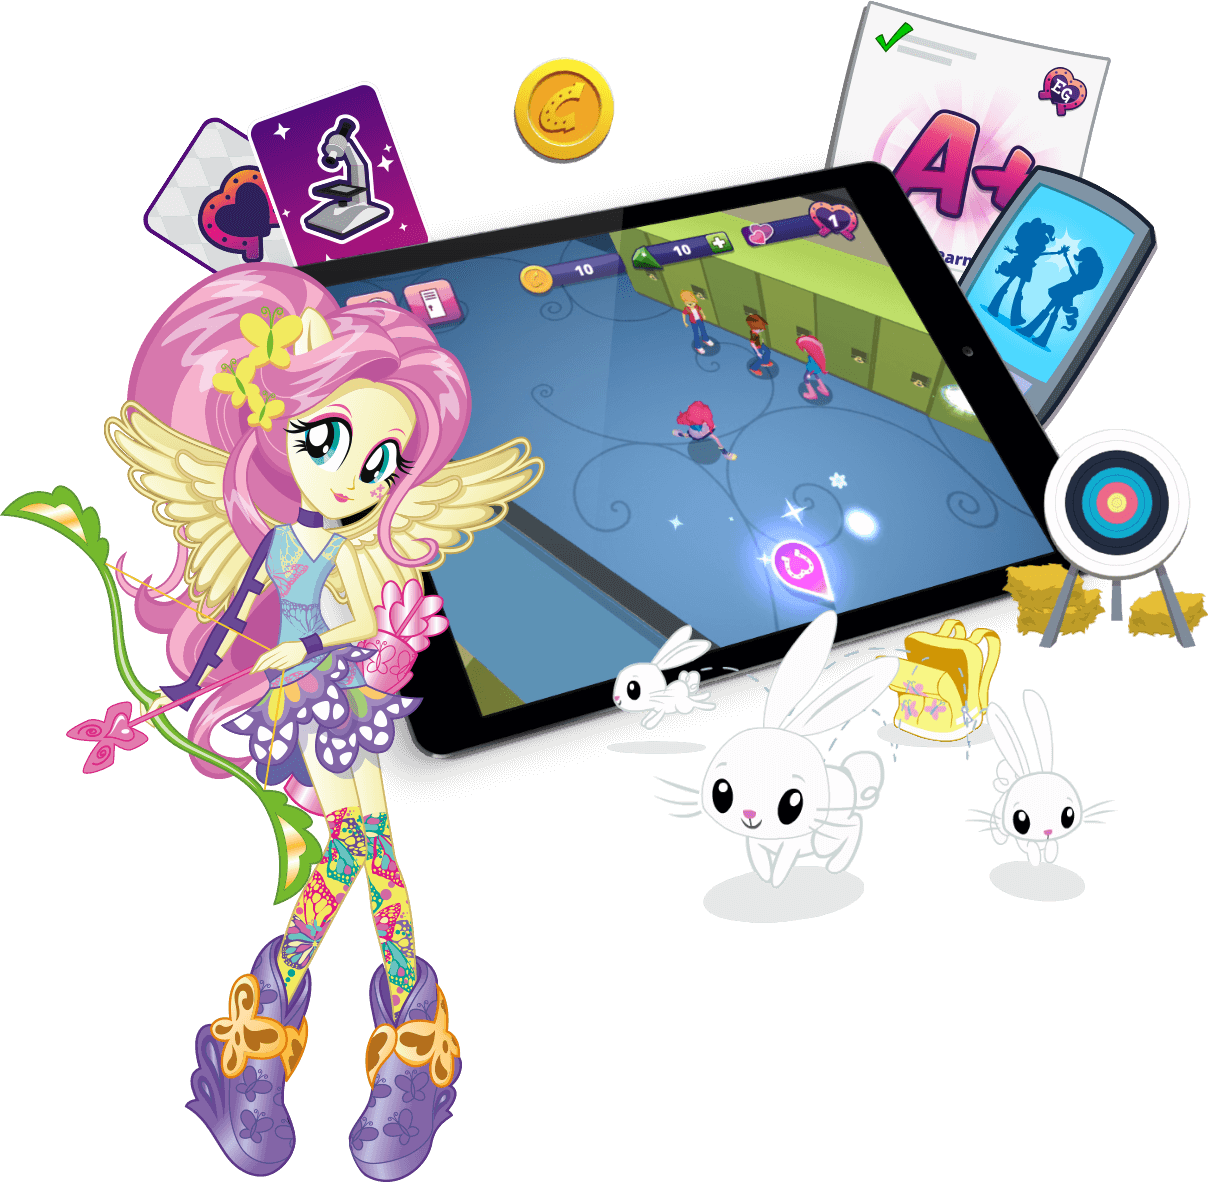 Equestria Girls Mobile Game Hasbro ǀ BKOM Studios